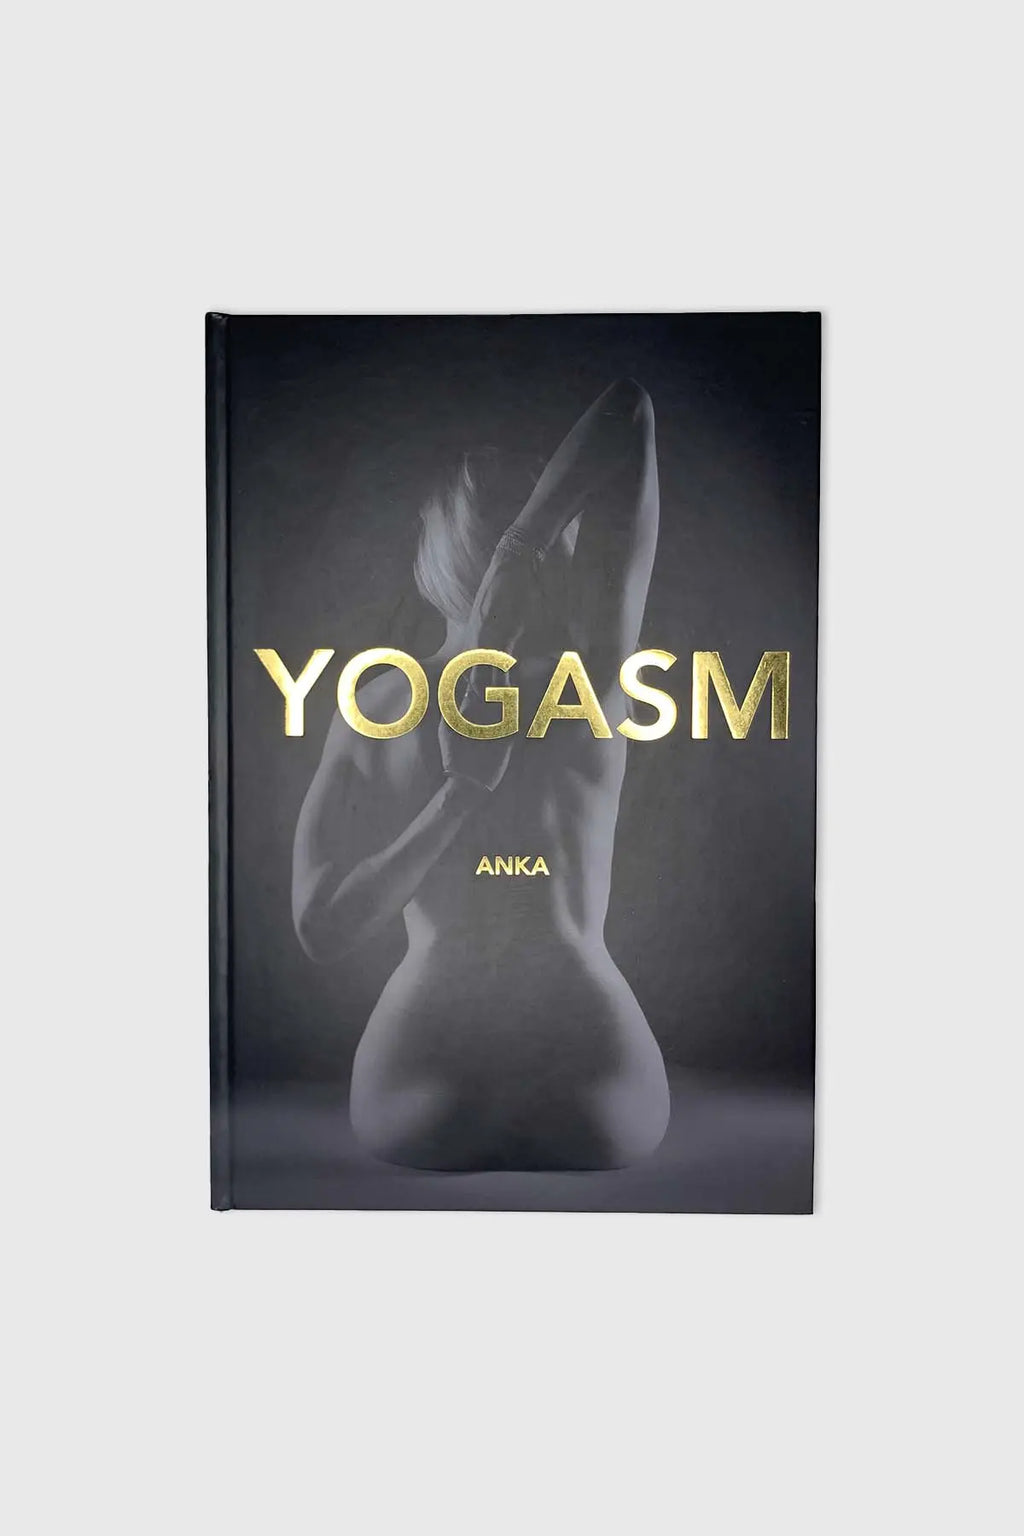 #547 - YOGASM art book based on the idea of Hélène Duval YUJ - House of Mindfulness